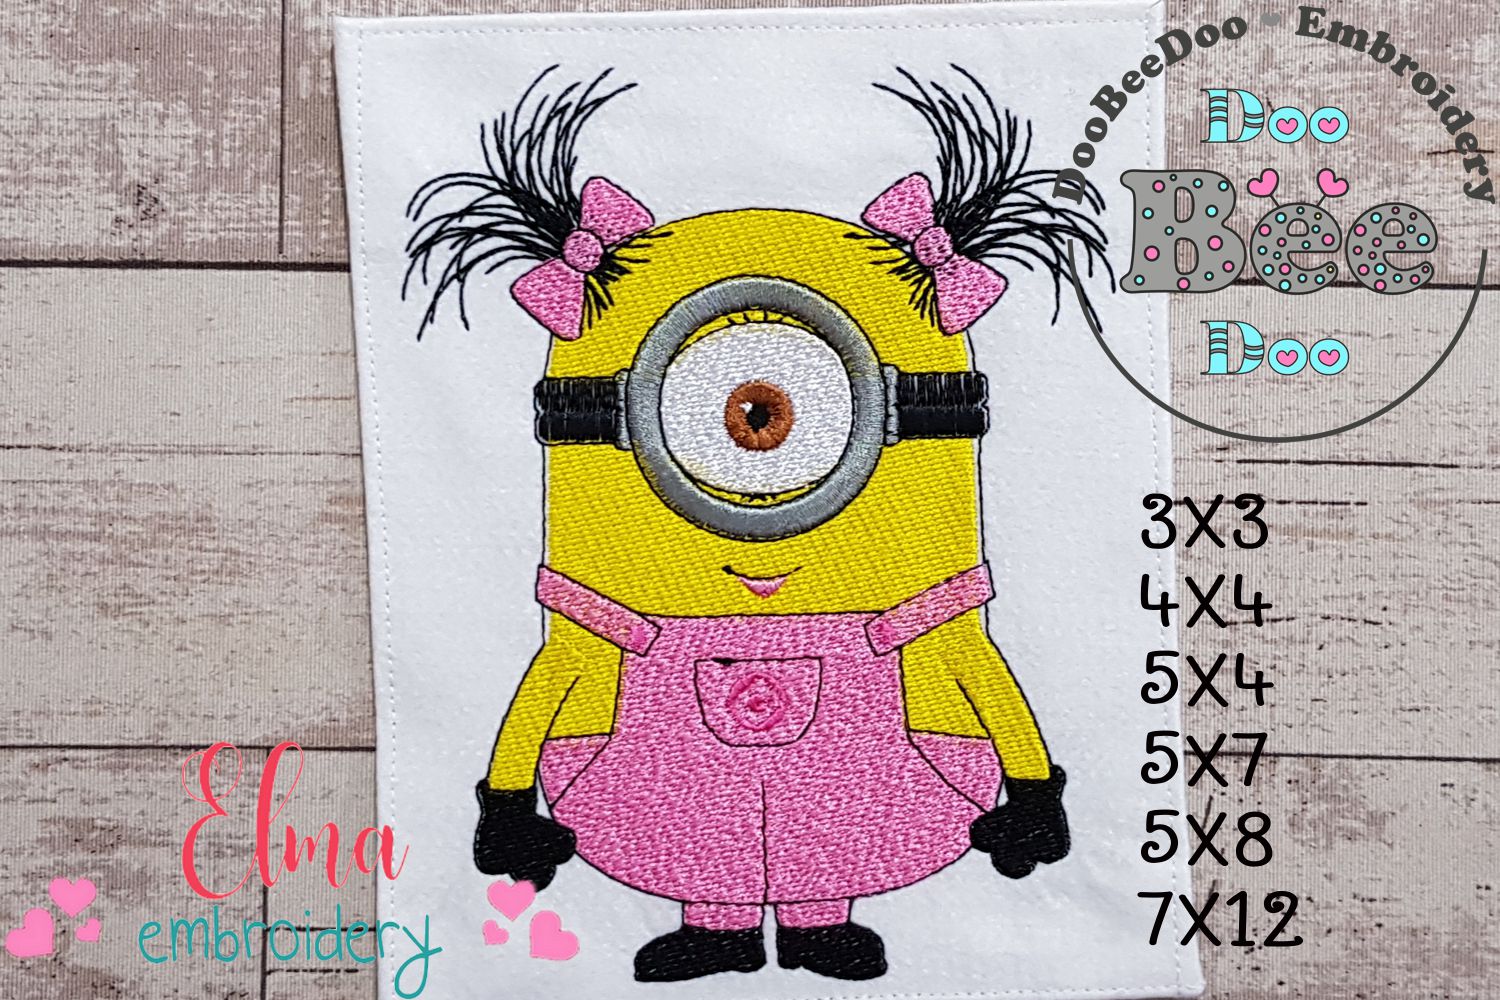 Minion girl or boy applique machine embroidery design 3 sizes despicable me  - SewAmykins